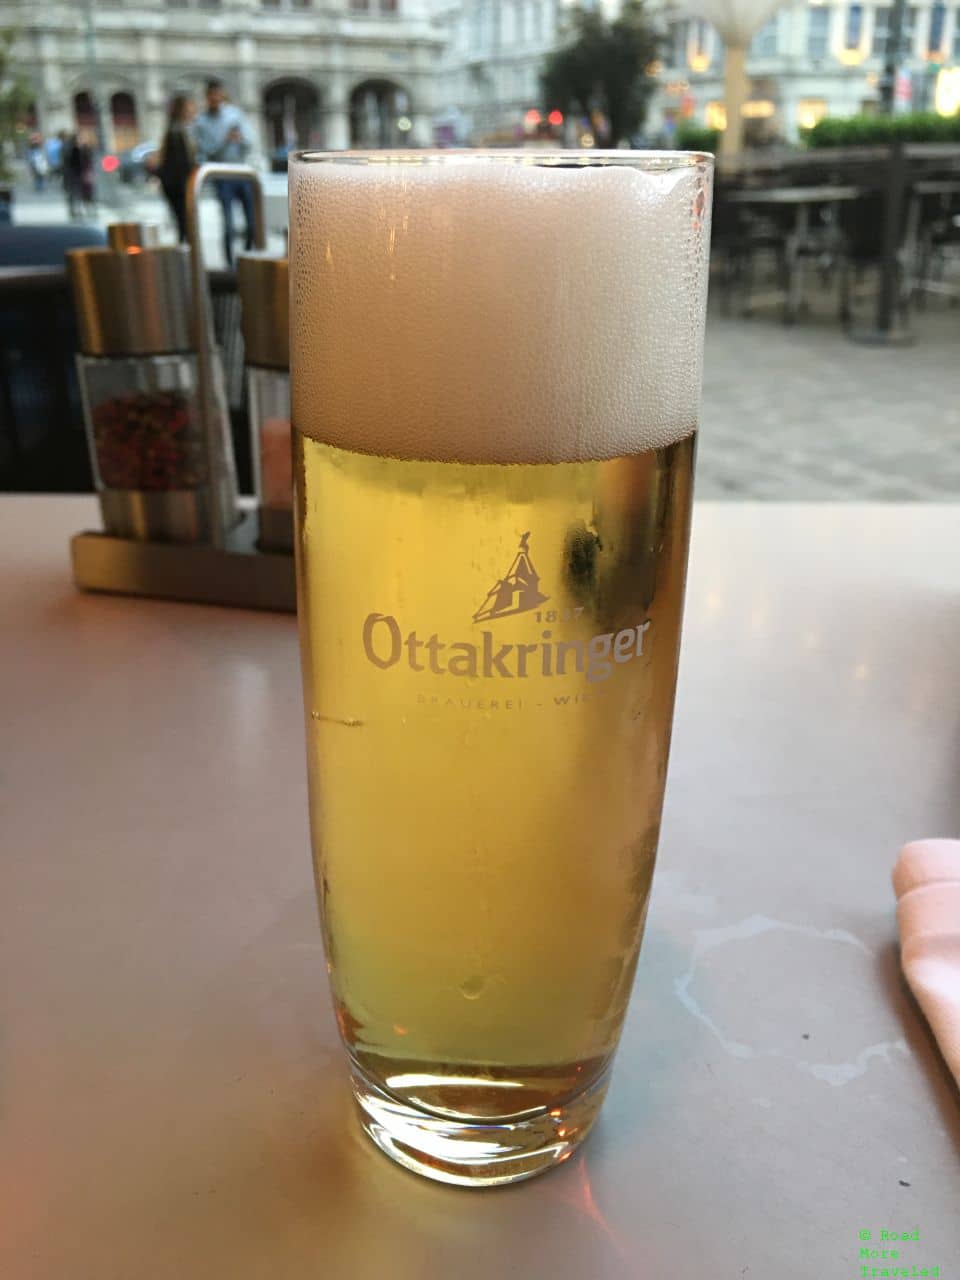 Enjoying a spring weekend in Vienna - Ottakringer beer at Cafe Mozart